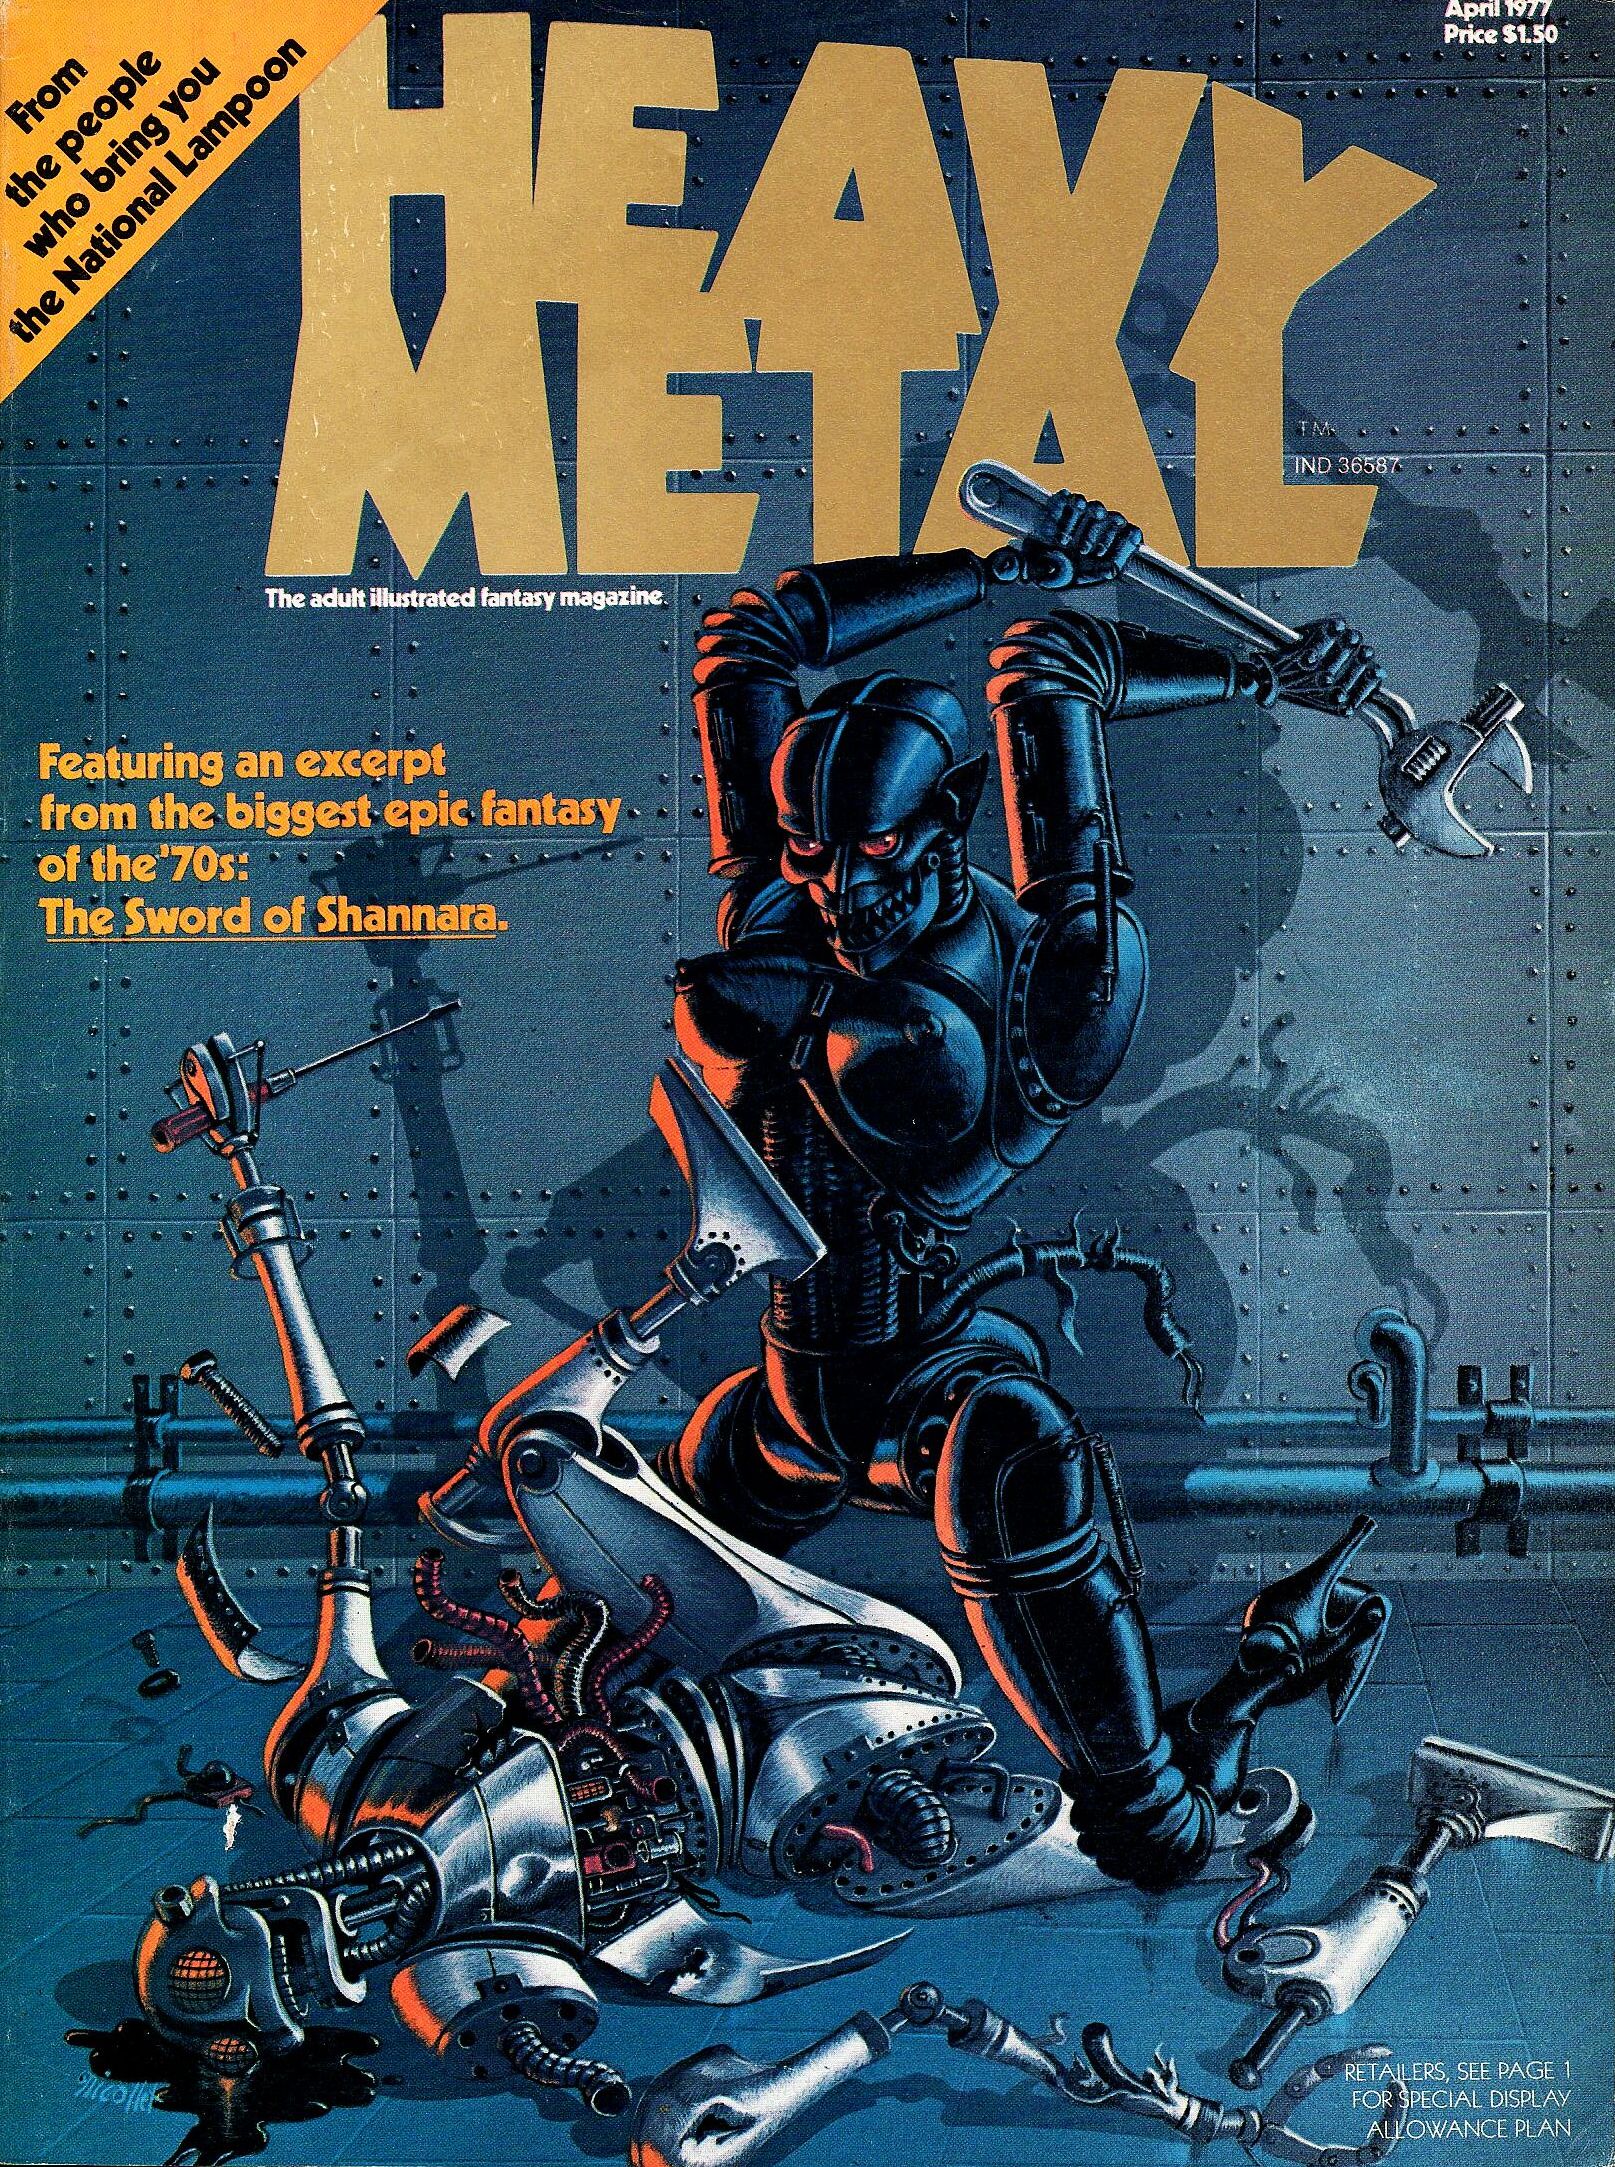 Heavy Metal. 1977. April – Volume 1 No. 1